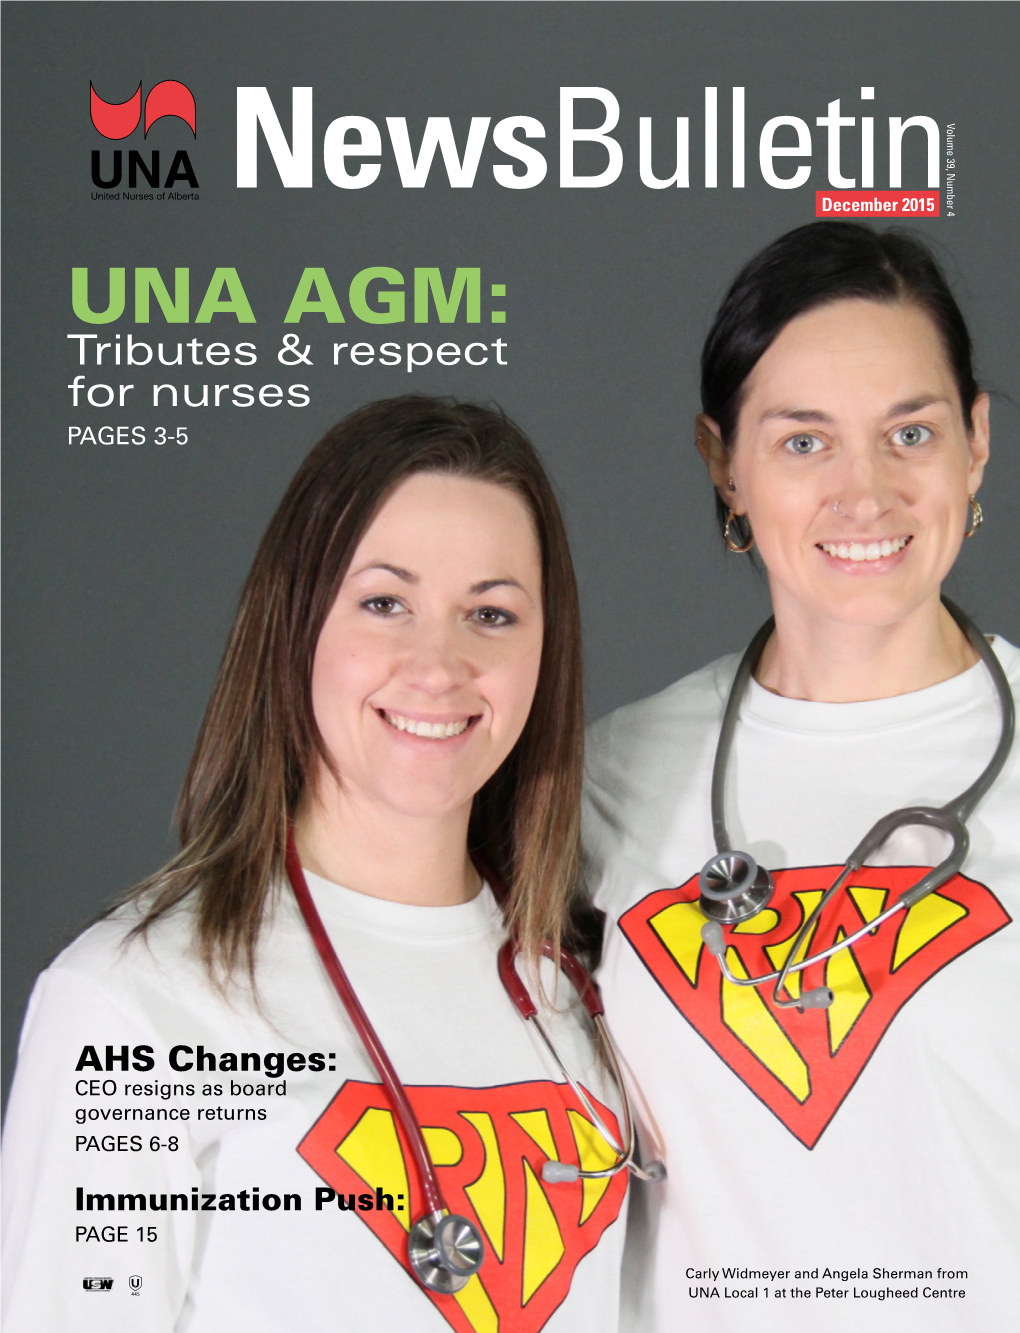 UNA AGM: Tributes & Respect for Nurses PAGES 3-5